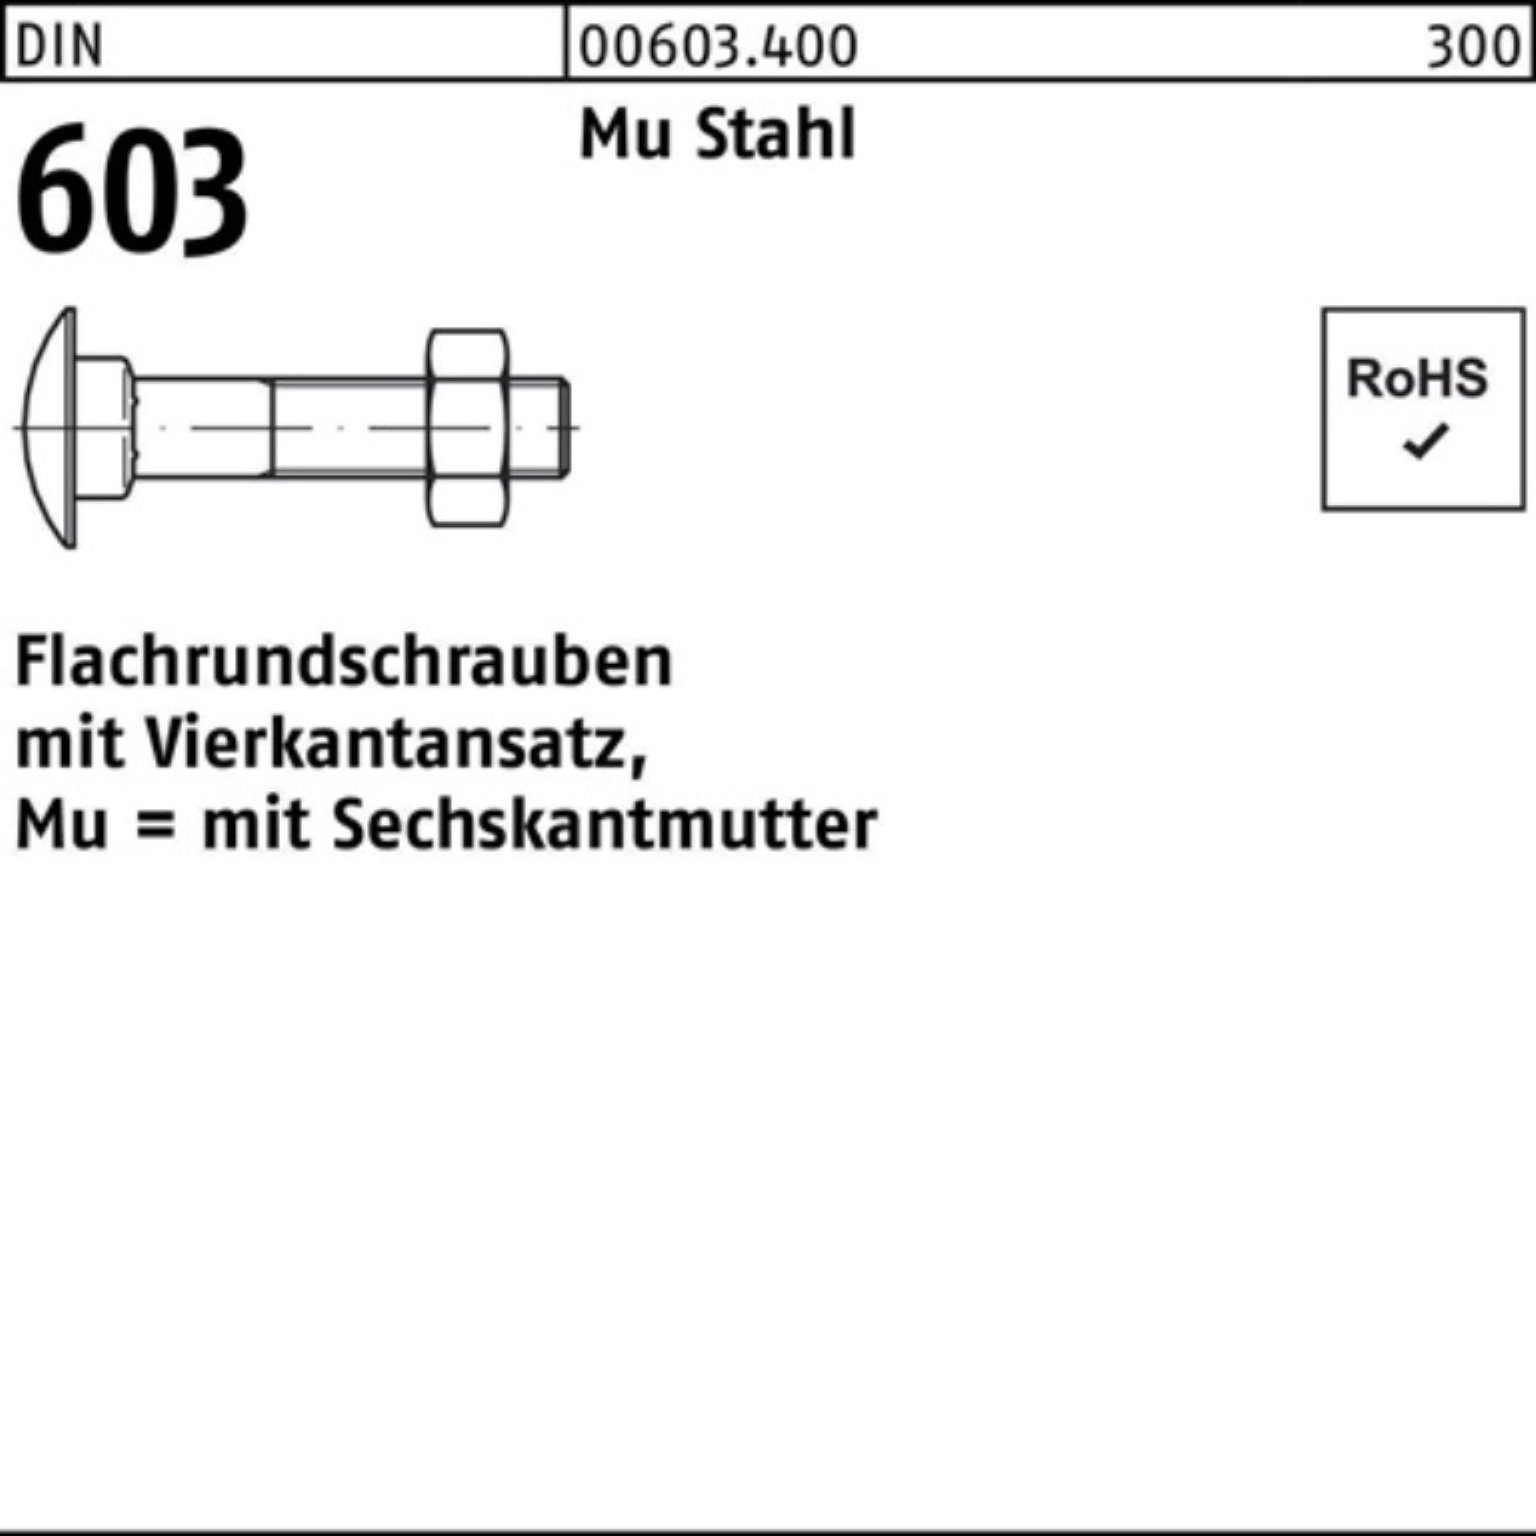 M12x320 603 Reyher Flachrundschraube Schraube 100er Pack Vierkantansatz/6-ktmutter DIN